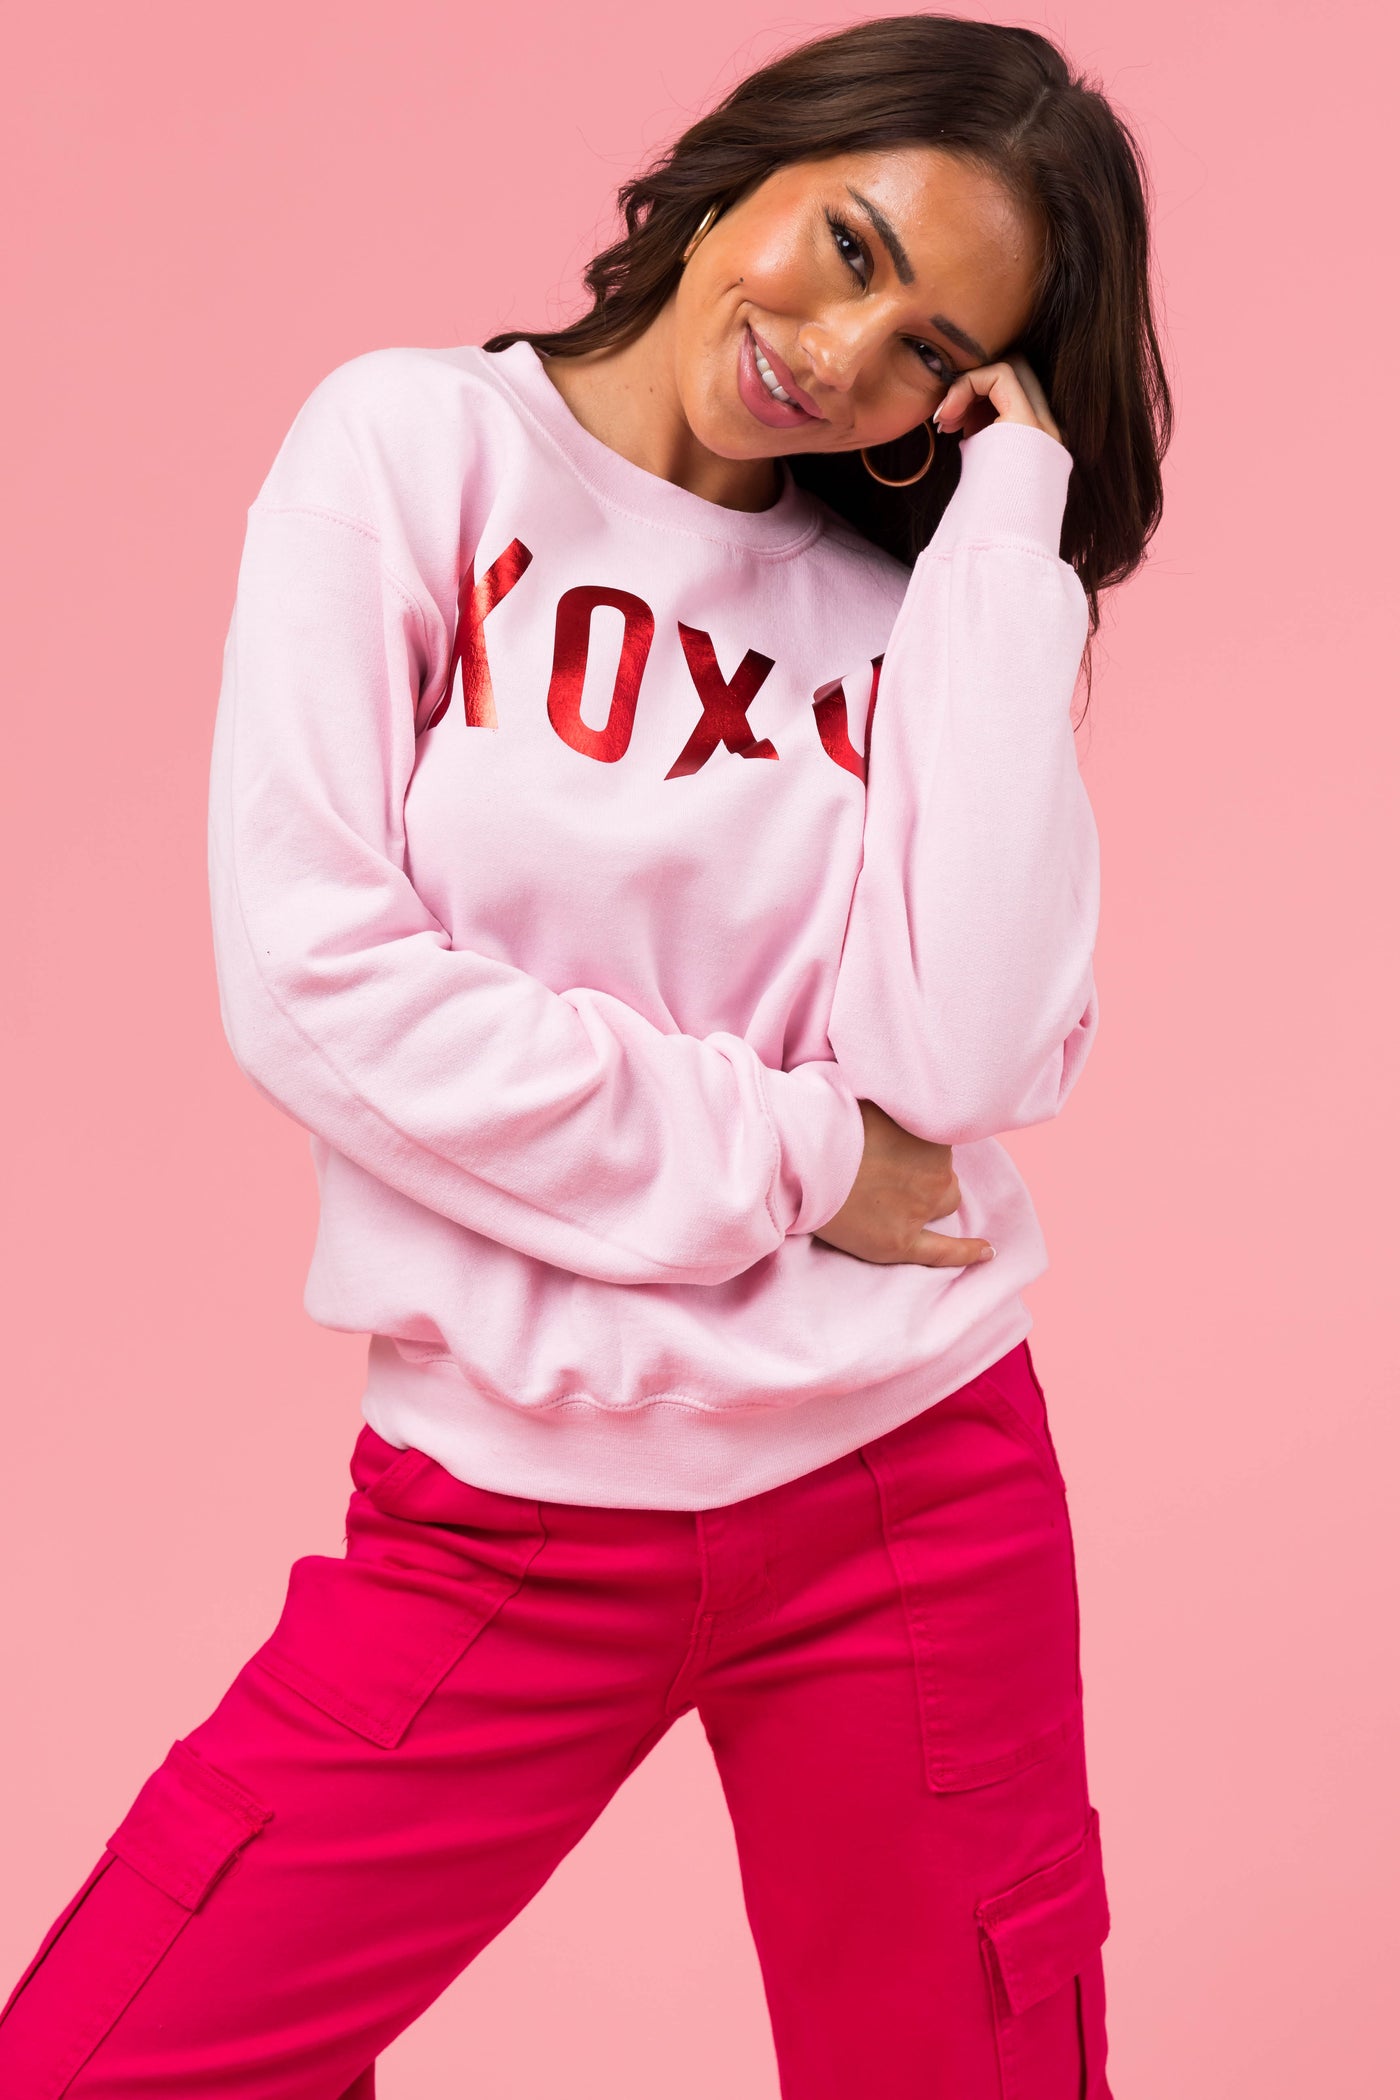 Carnation 'XOXO' Shiny Graphic Sweatshirt